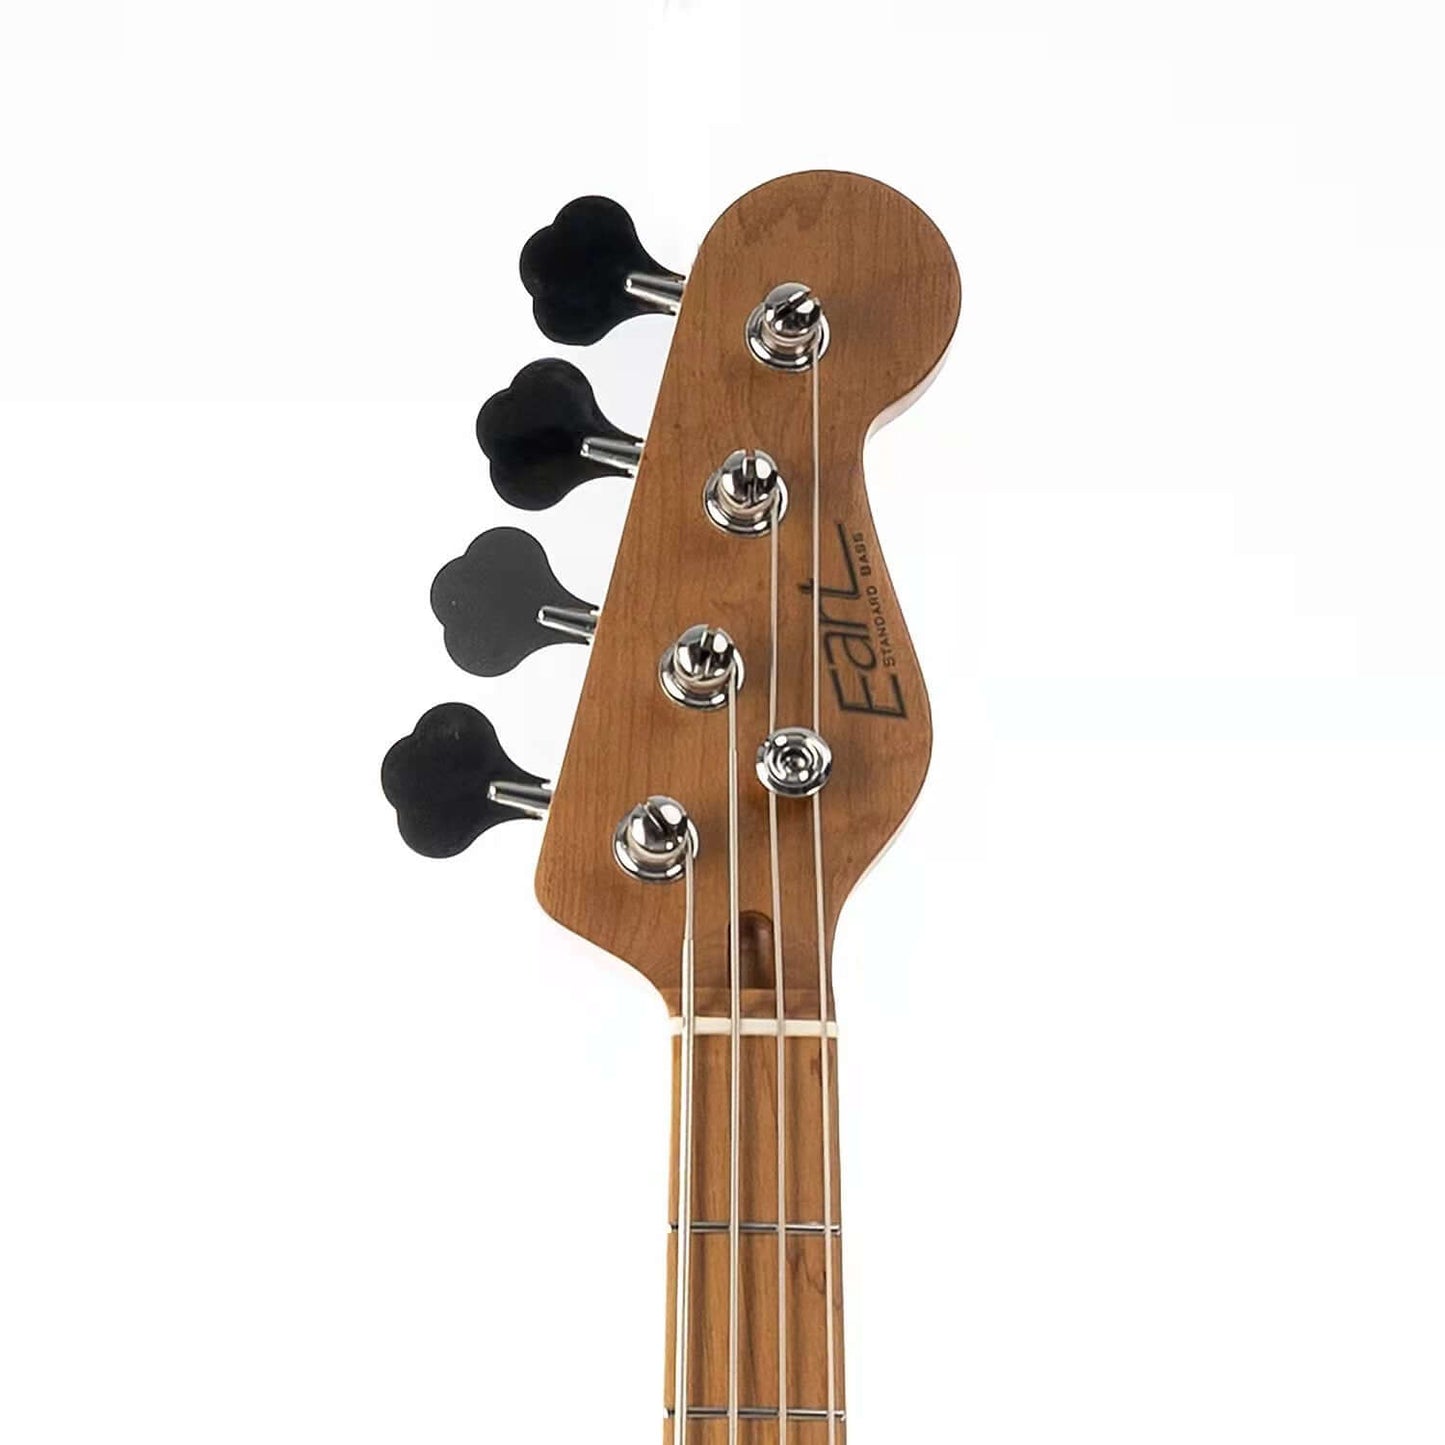 Eart Guitars B-10 Roasted Maple Neck Mahogany Body 4 Strings Bass Guitars